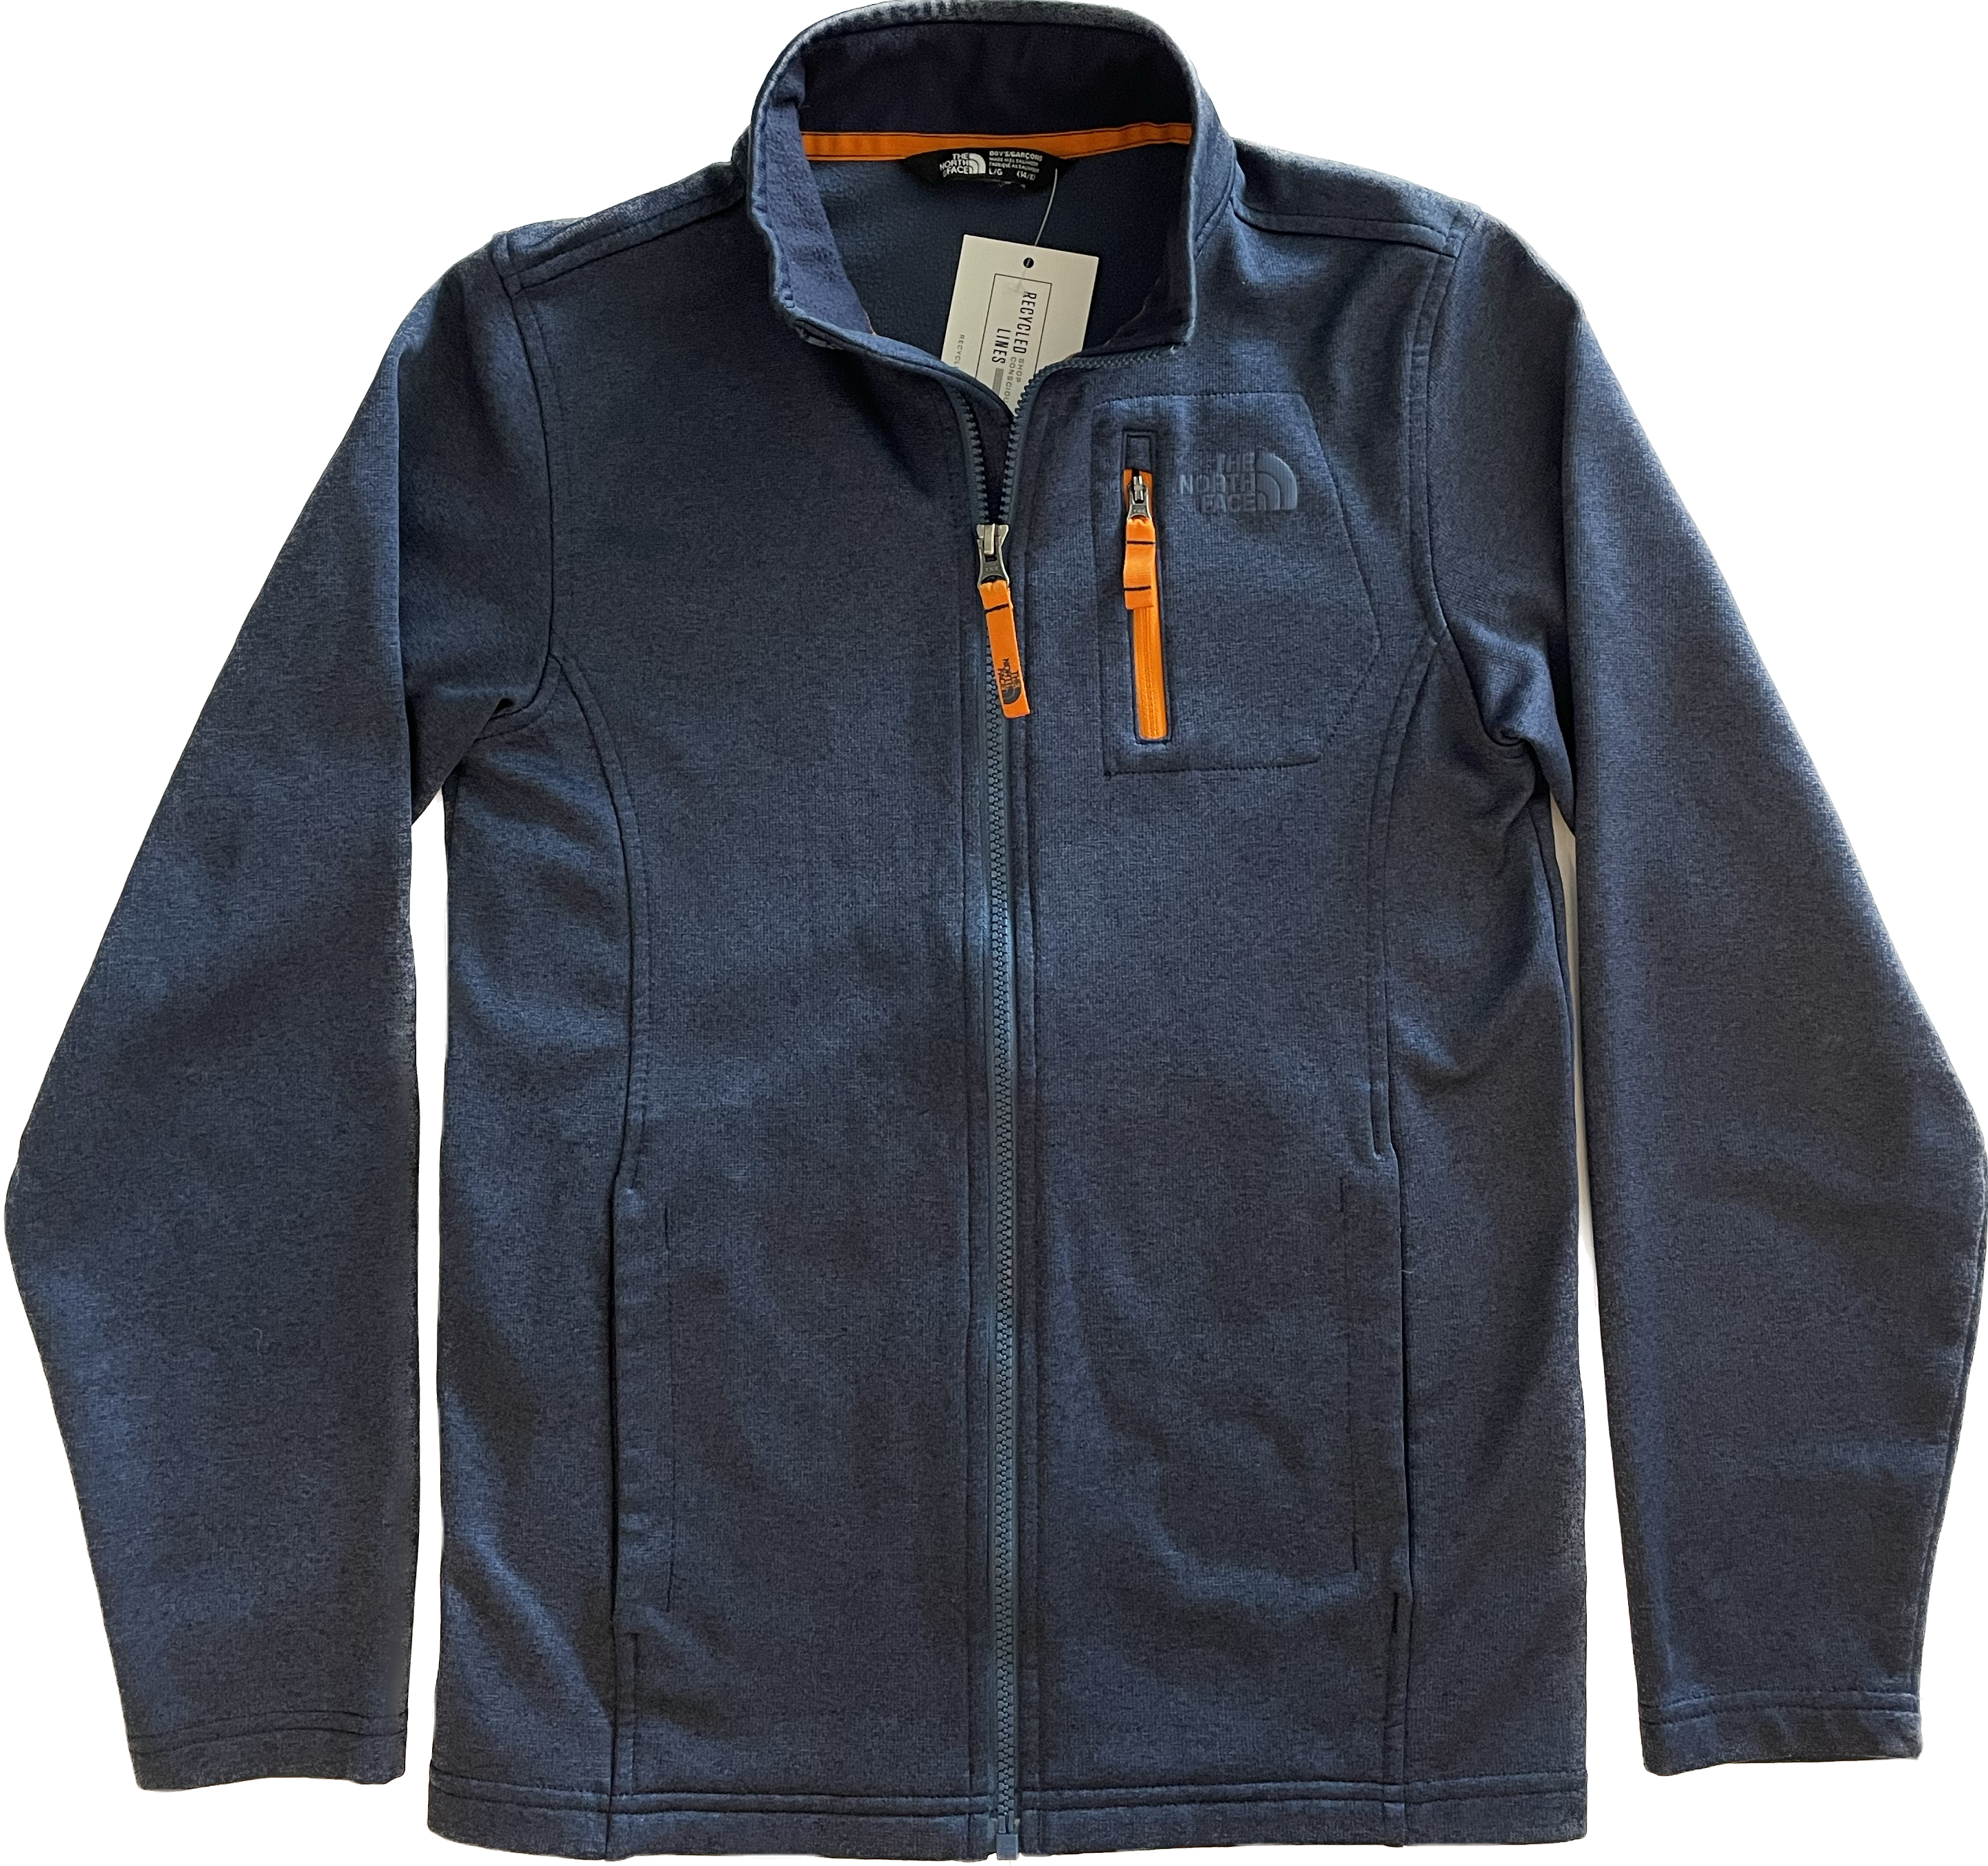 The North Face Jacket, Navy/Orange Boys Size L (14/16)